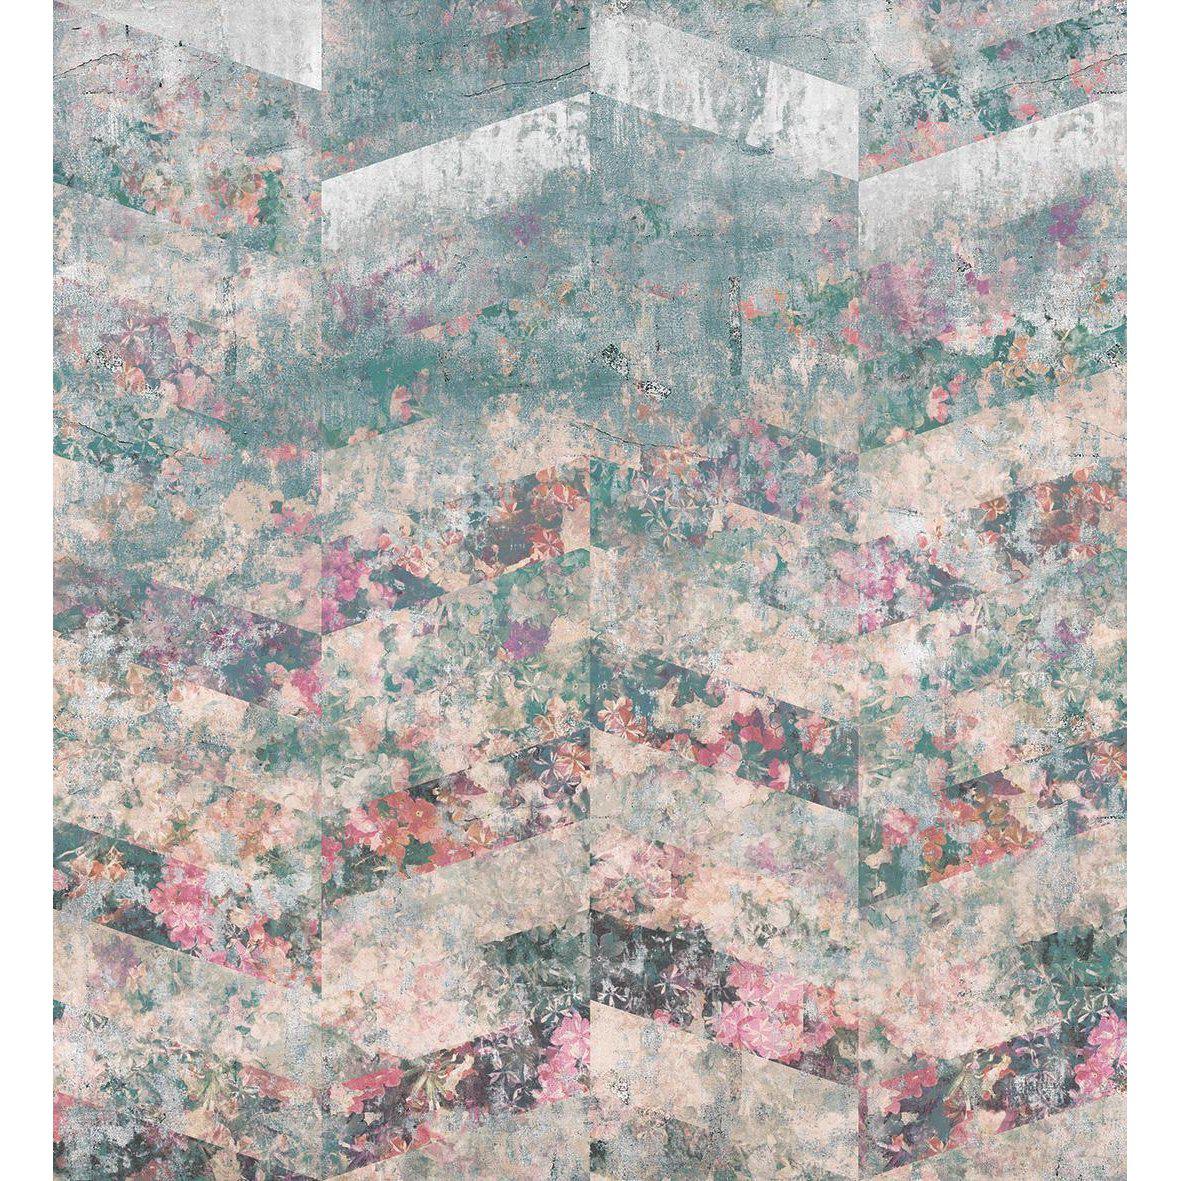 Spectrum-Digital Wallpaper-London Art-Green-16067-02